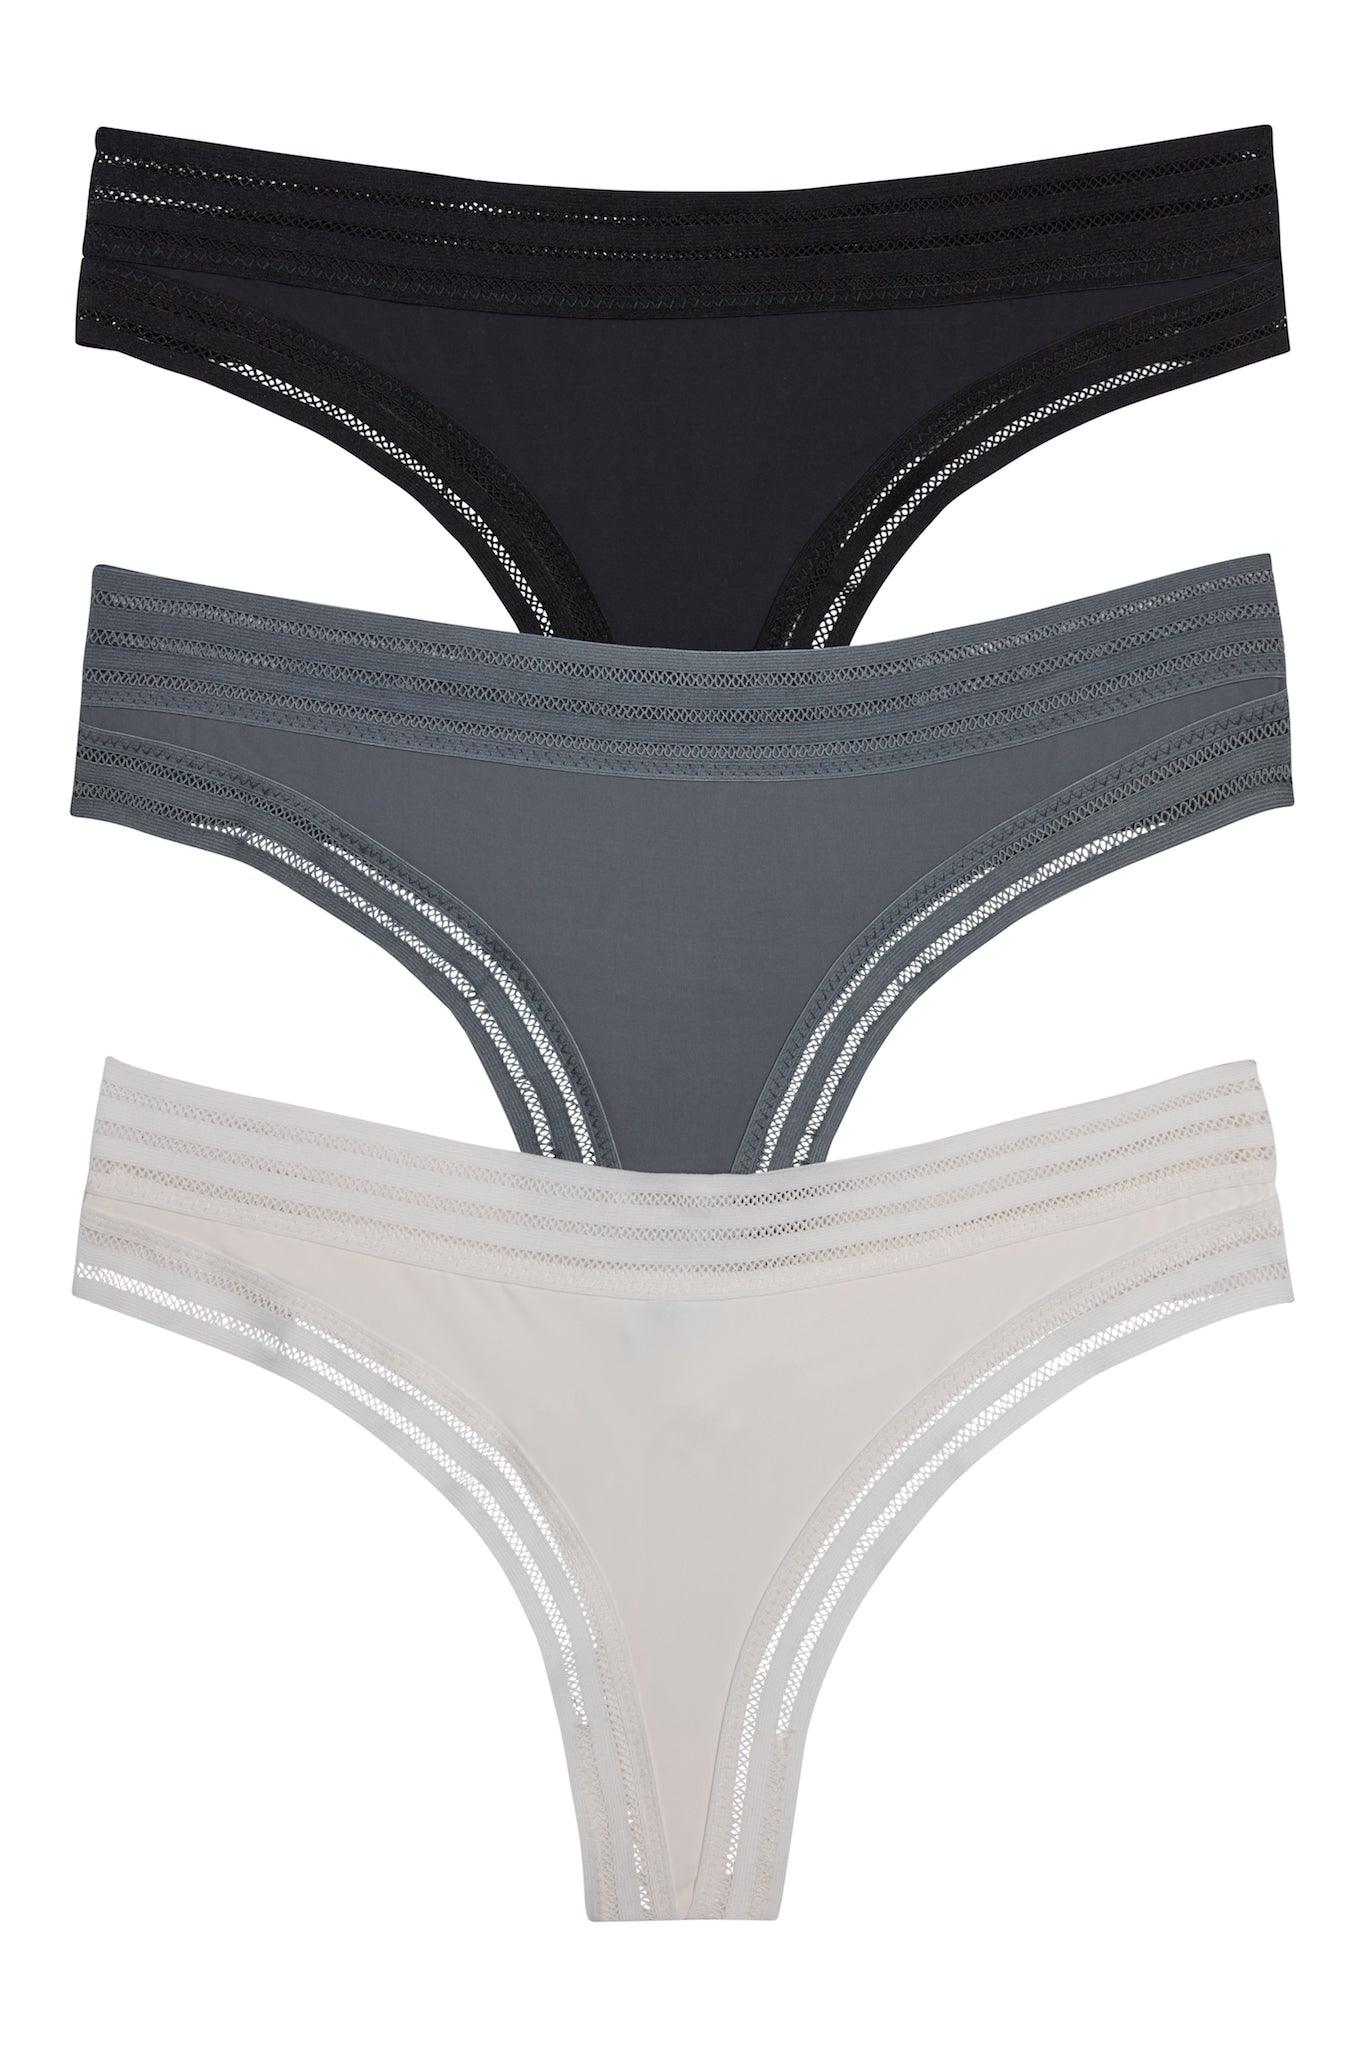 Micki Thong 3 Pack - Underwear - Black/Graphite/Petal Pinkl